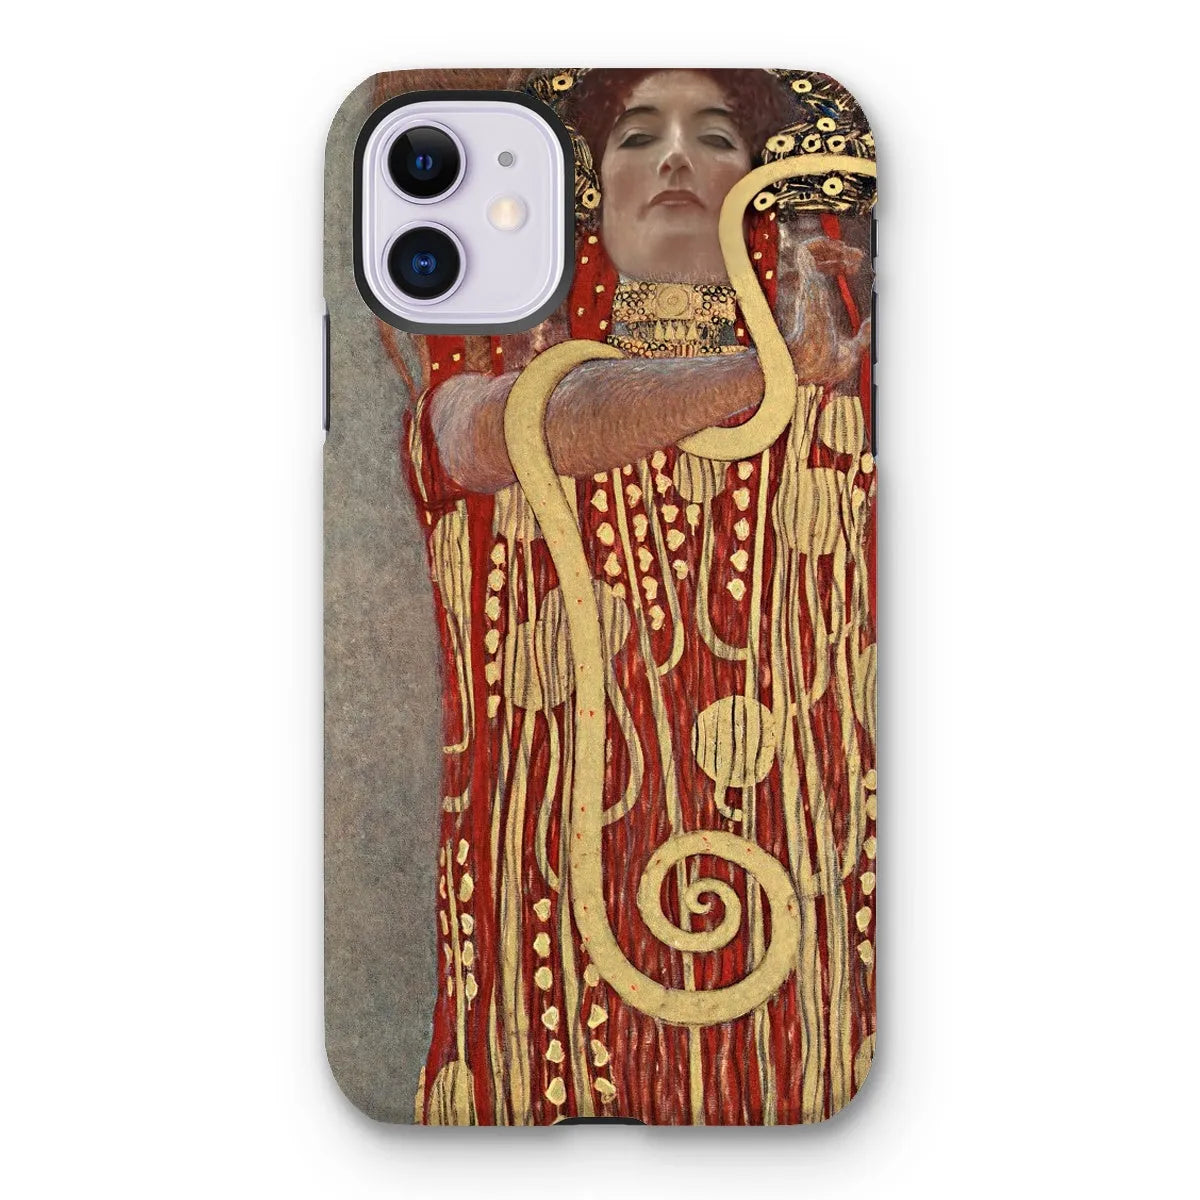 Hygieia - Vienna Succession Phone Case - Gustav Klimt - Iphone 11 / Matte - Mobile Phone Cases - Aesthetic Art